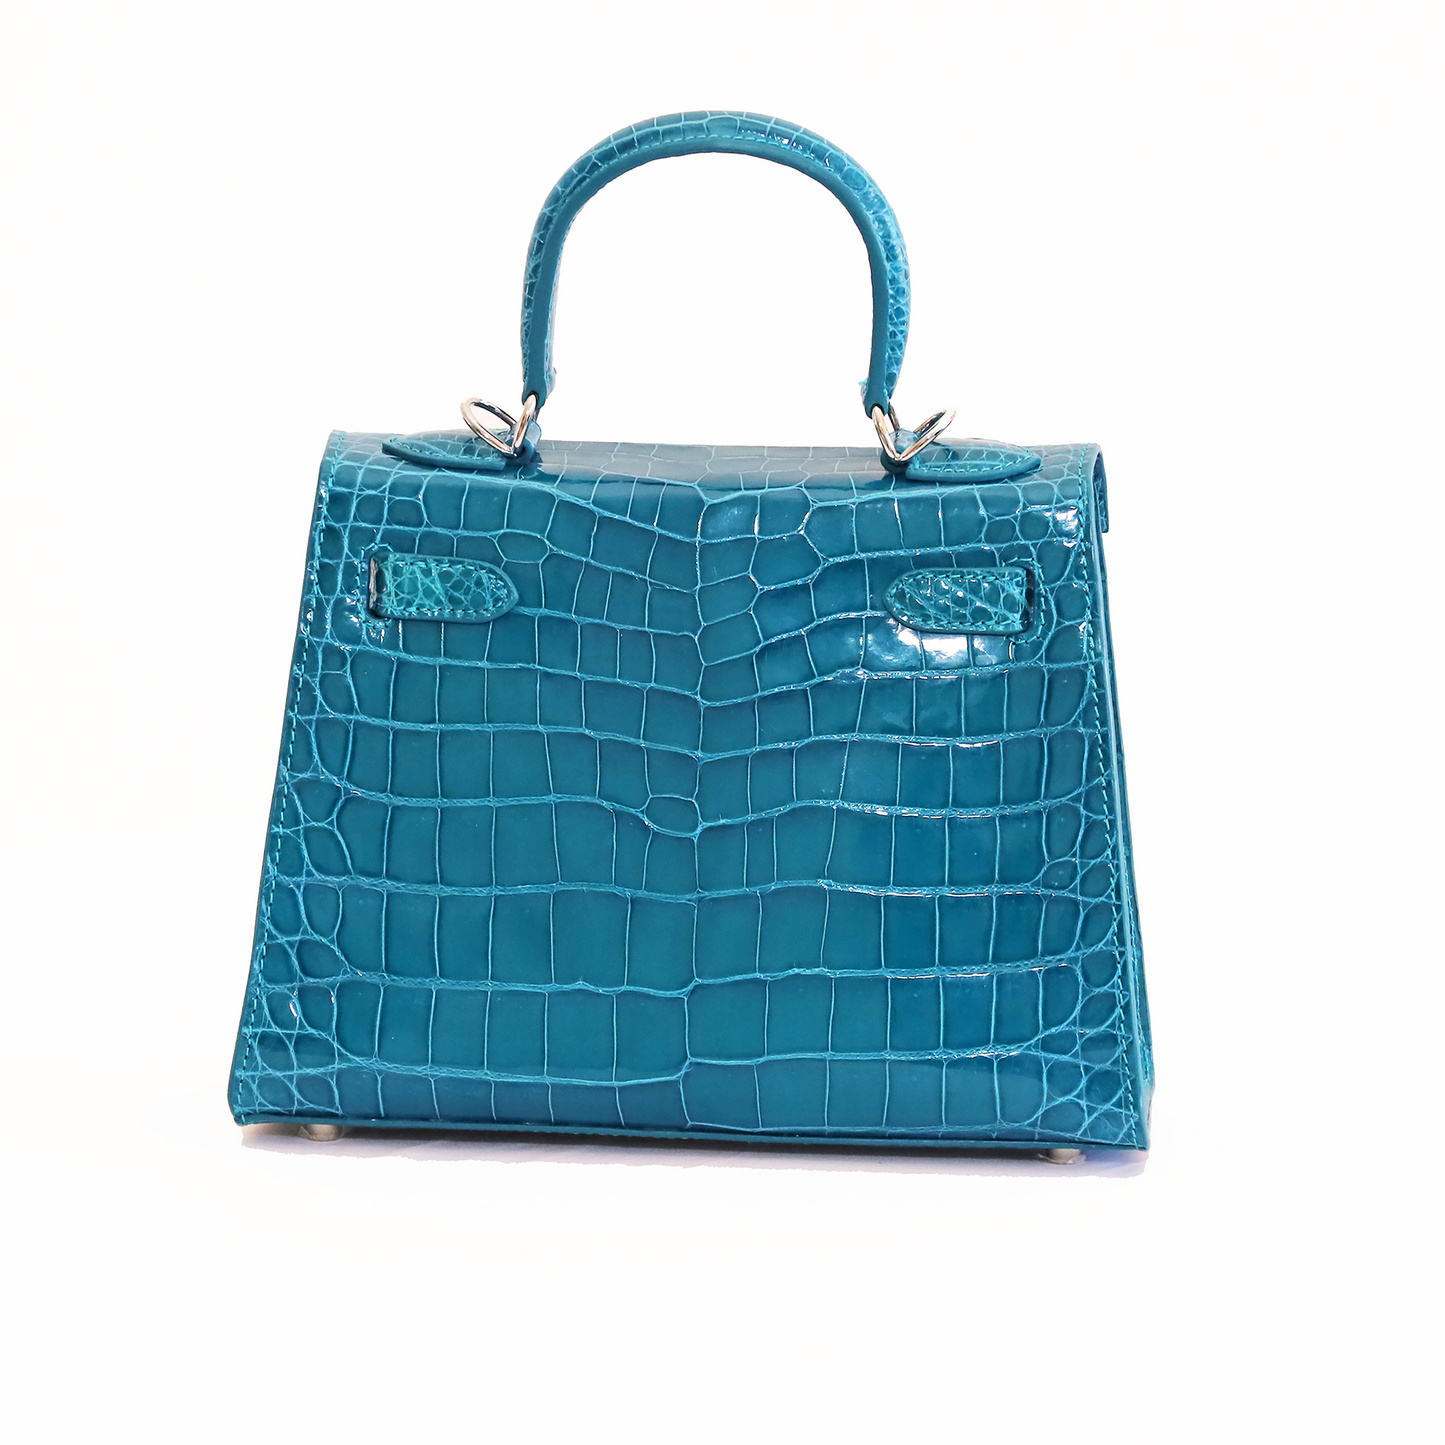 Princess Handbag in Shiny Turquoise Crocodile Belly Skin